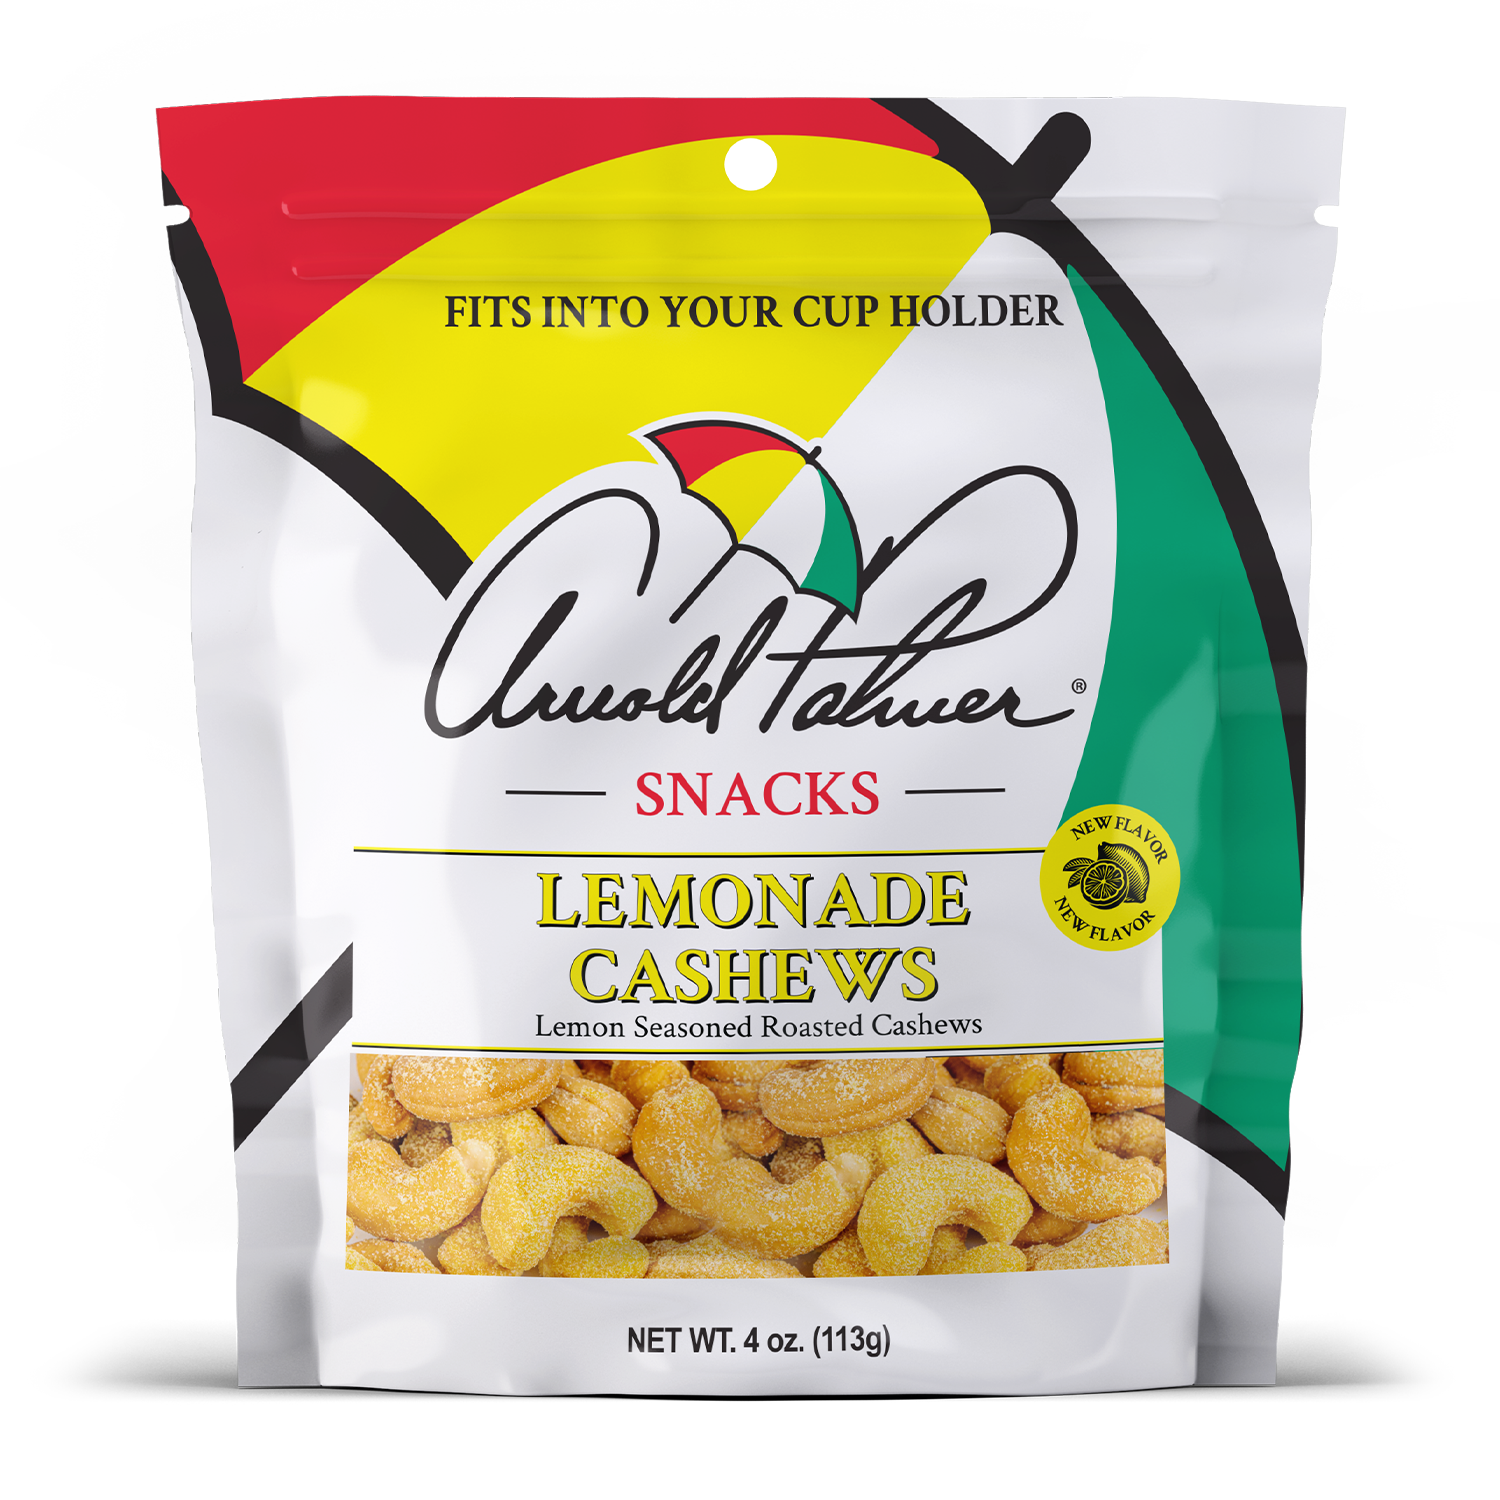 Wholesale - Lemonade Cashews - Cupholder Bags - 36ct